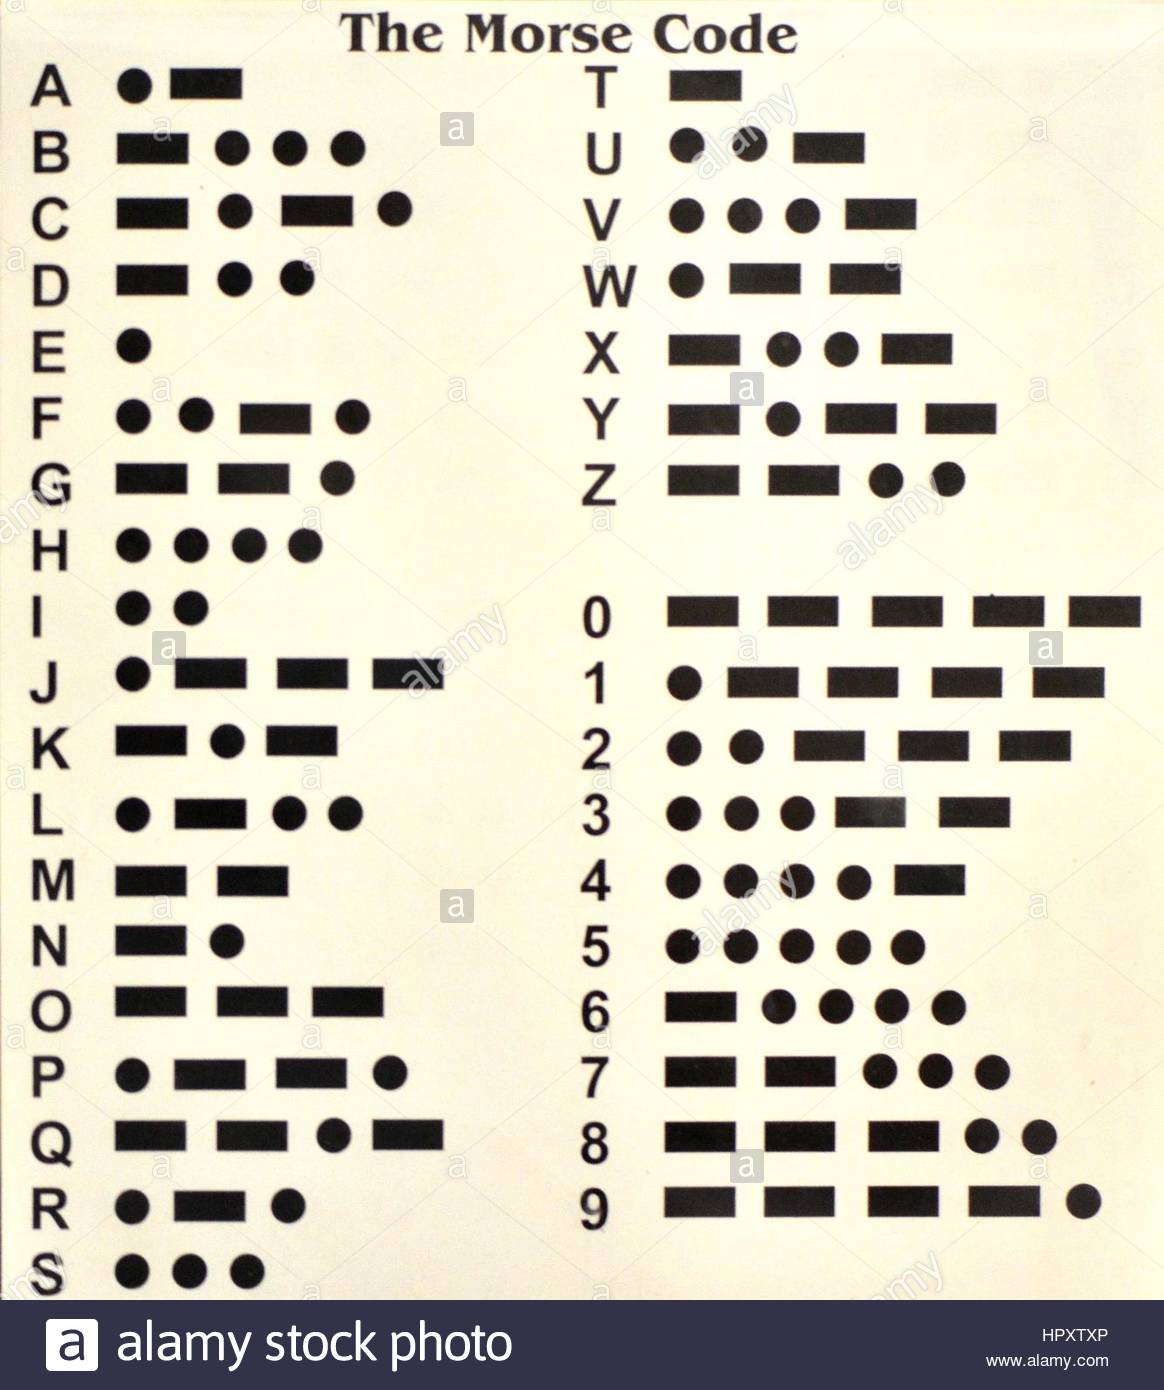 Morse code decoder software free